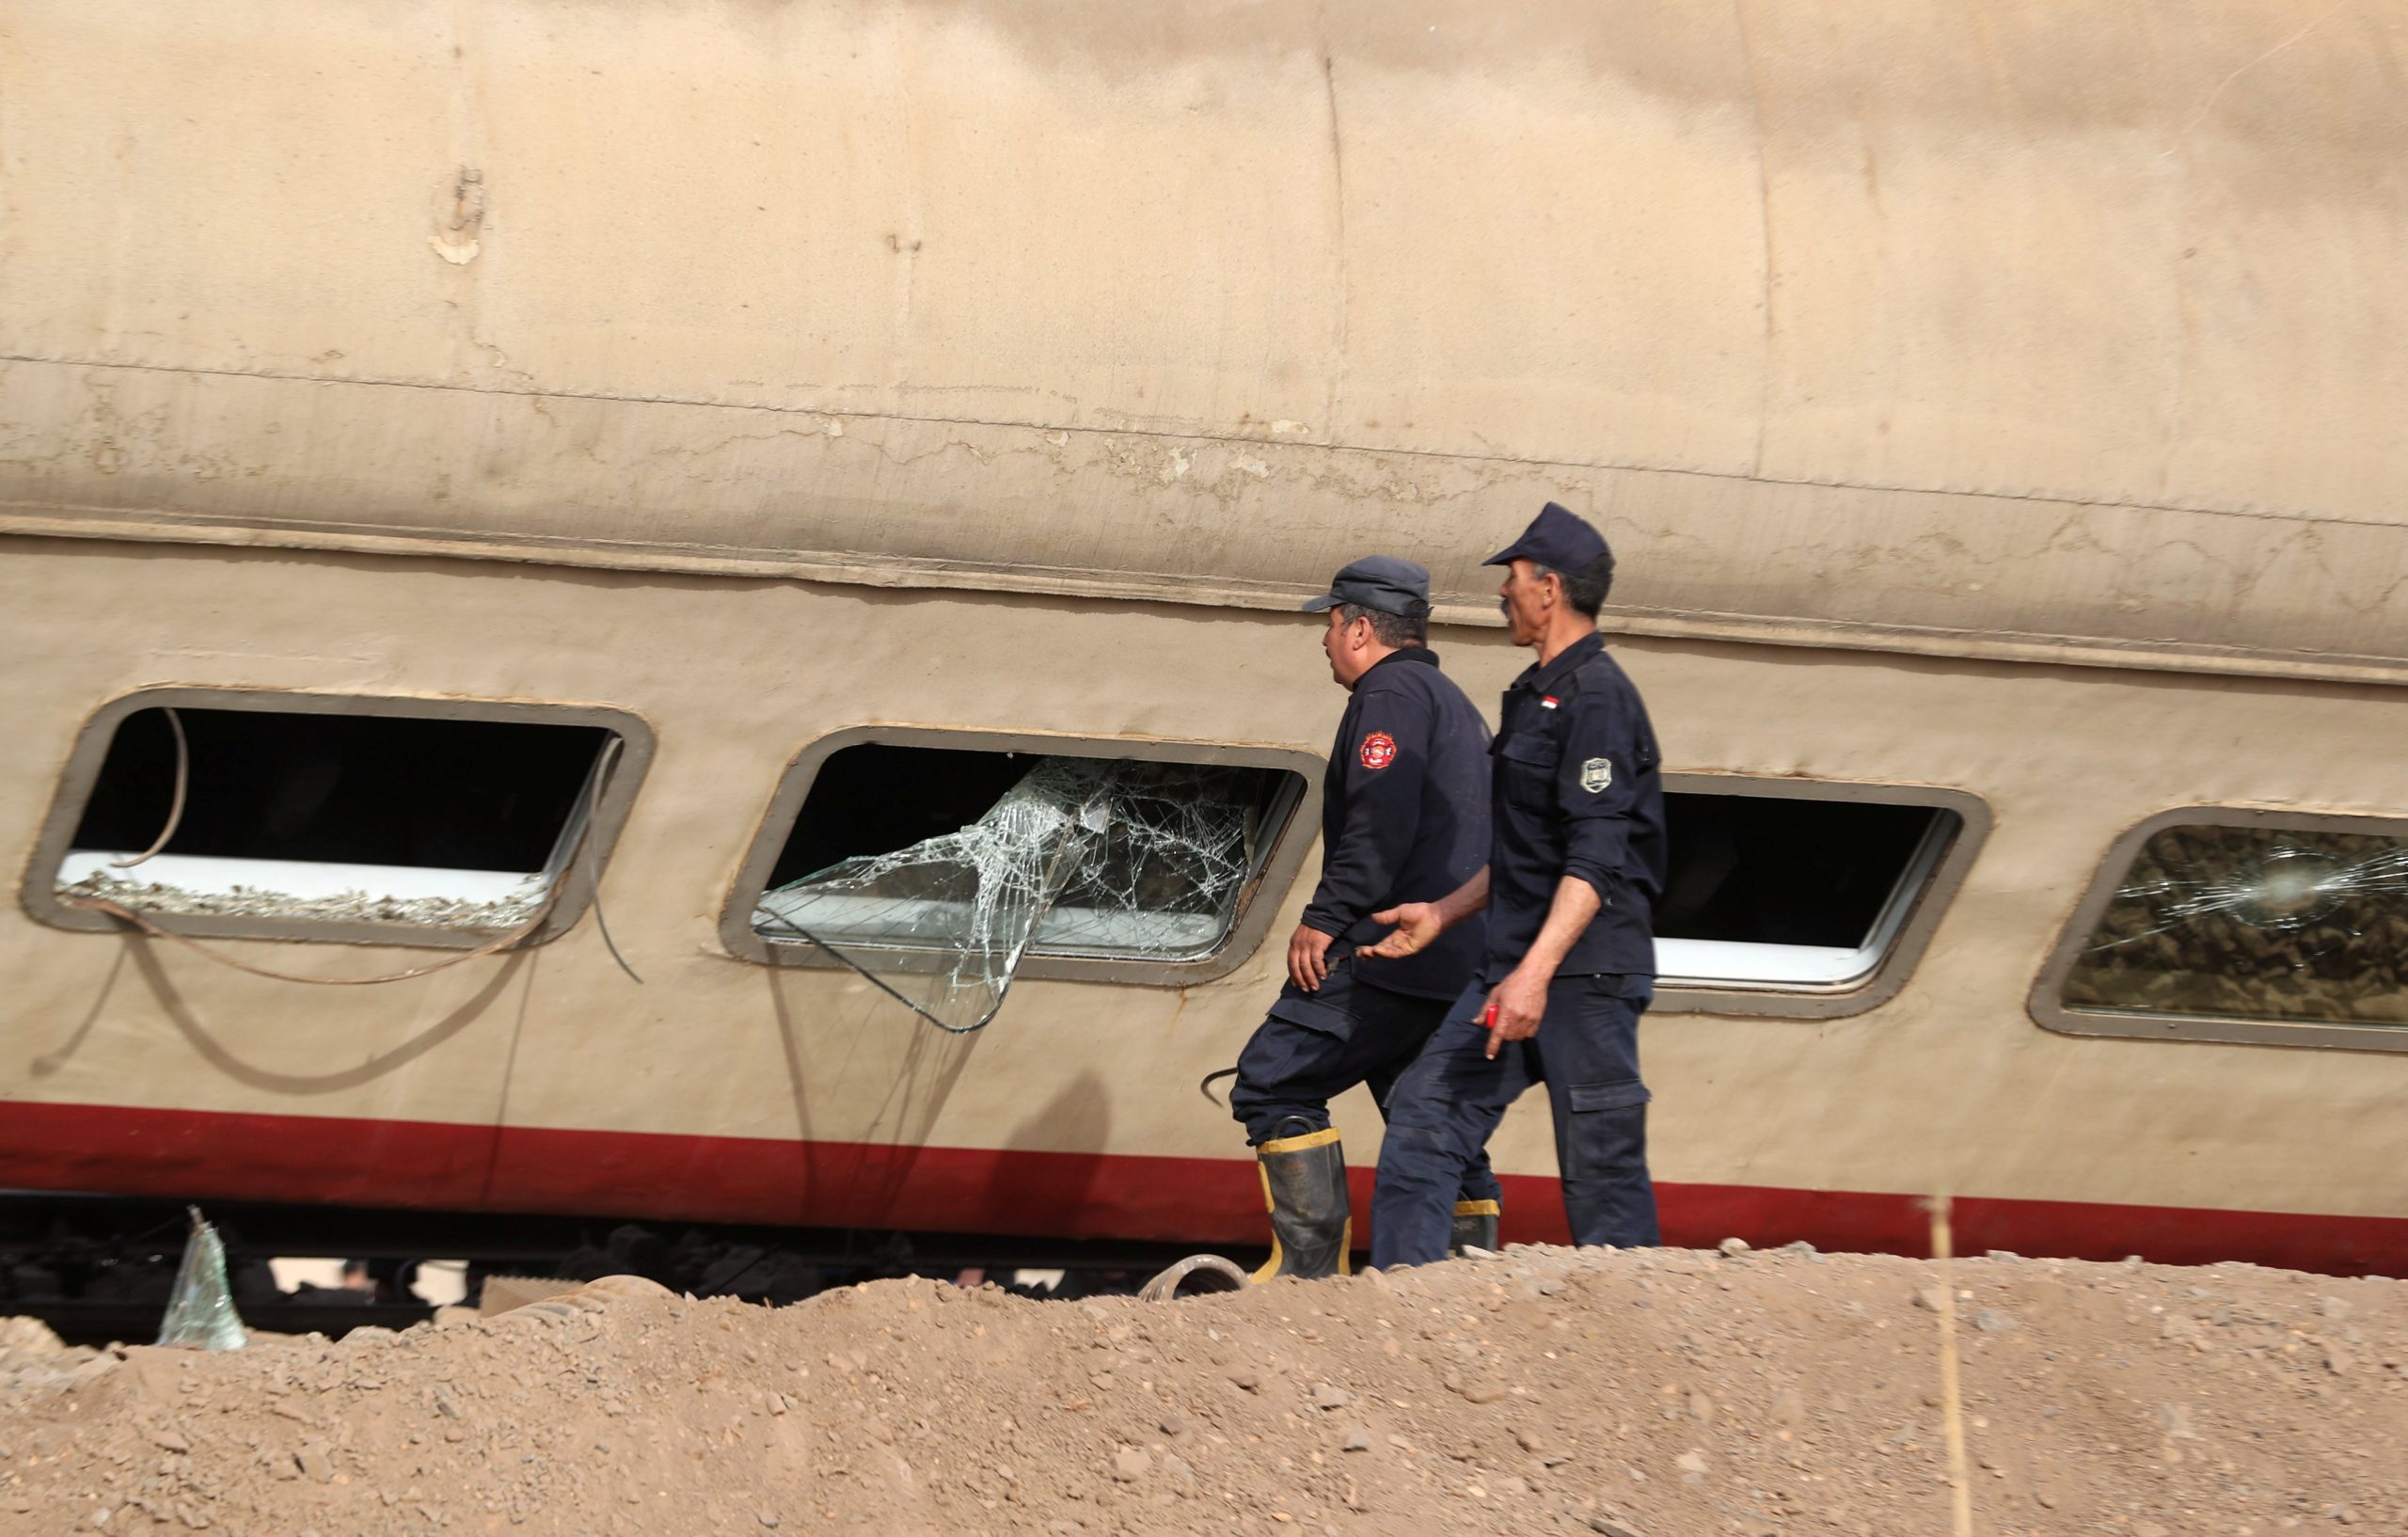 Accidente de tren en Egipto - Accidente de tren en Egipto